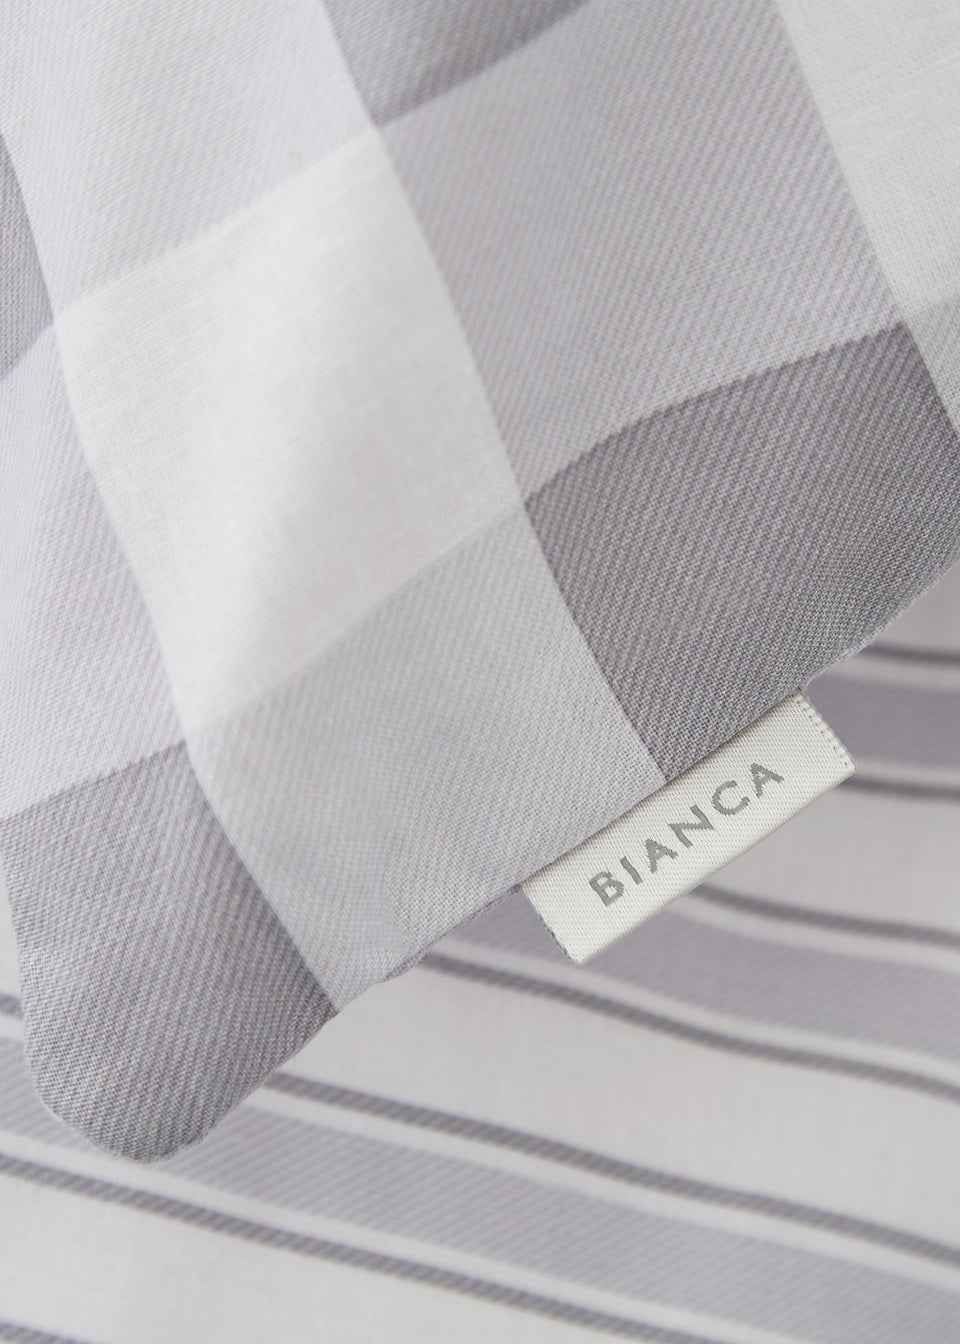 Bianca Fine Linens Check And Stripe Cotton Duvet Cover